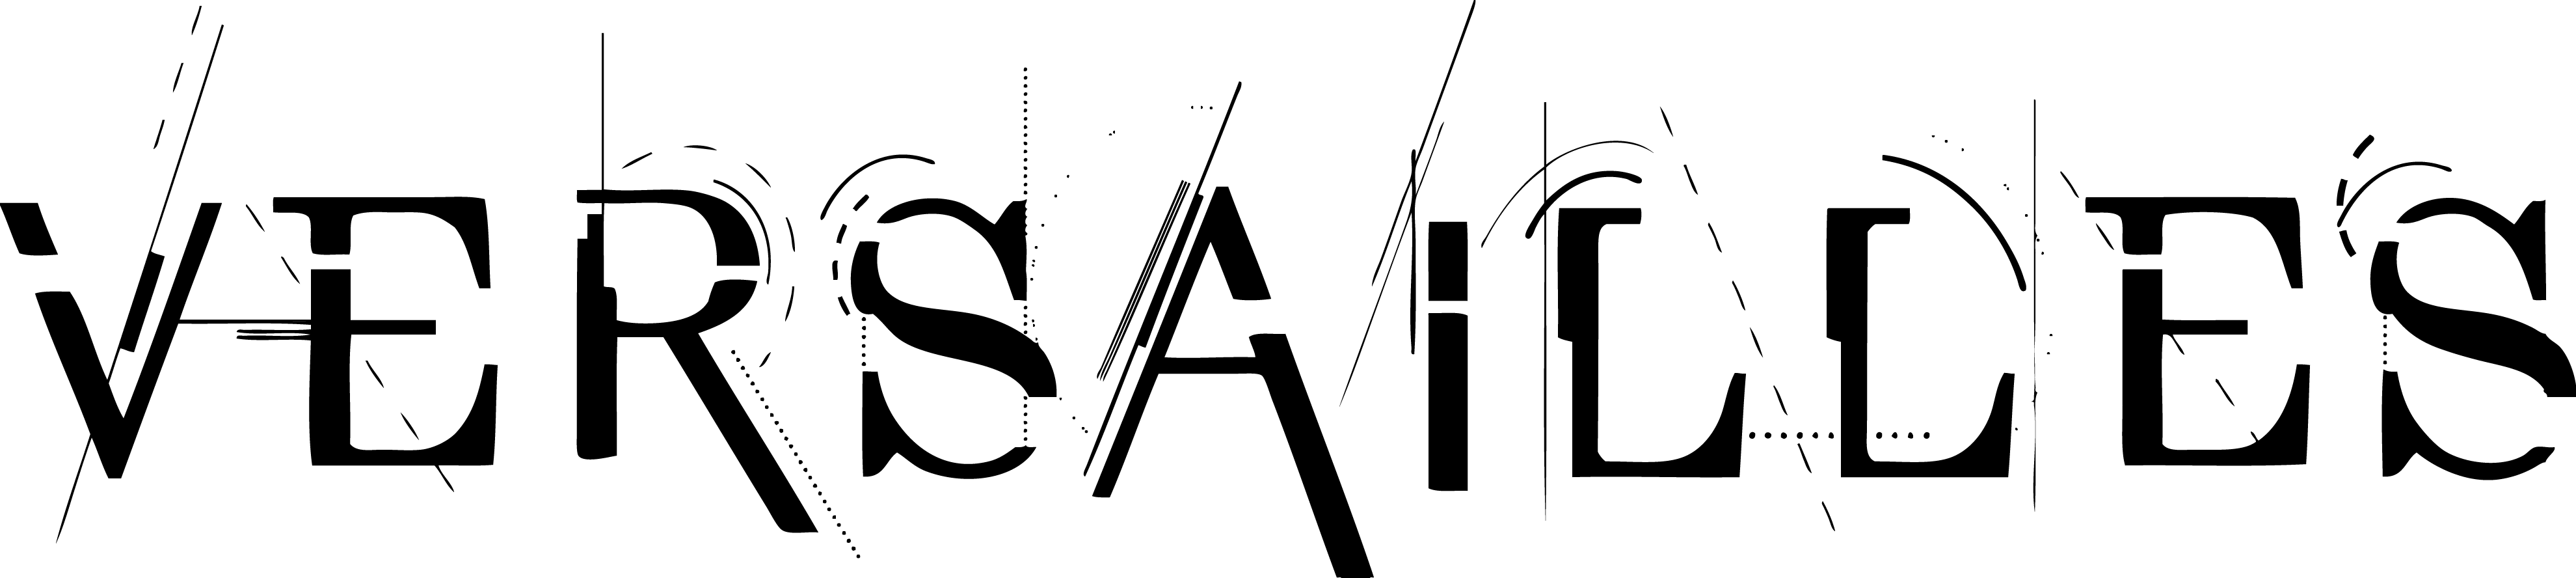 Do - Versailles Tv Show Logo (3960x888)